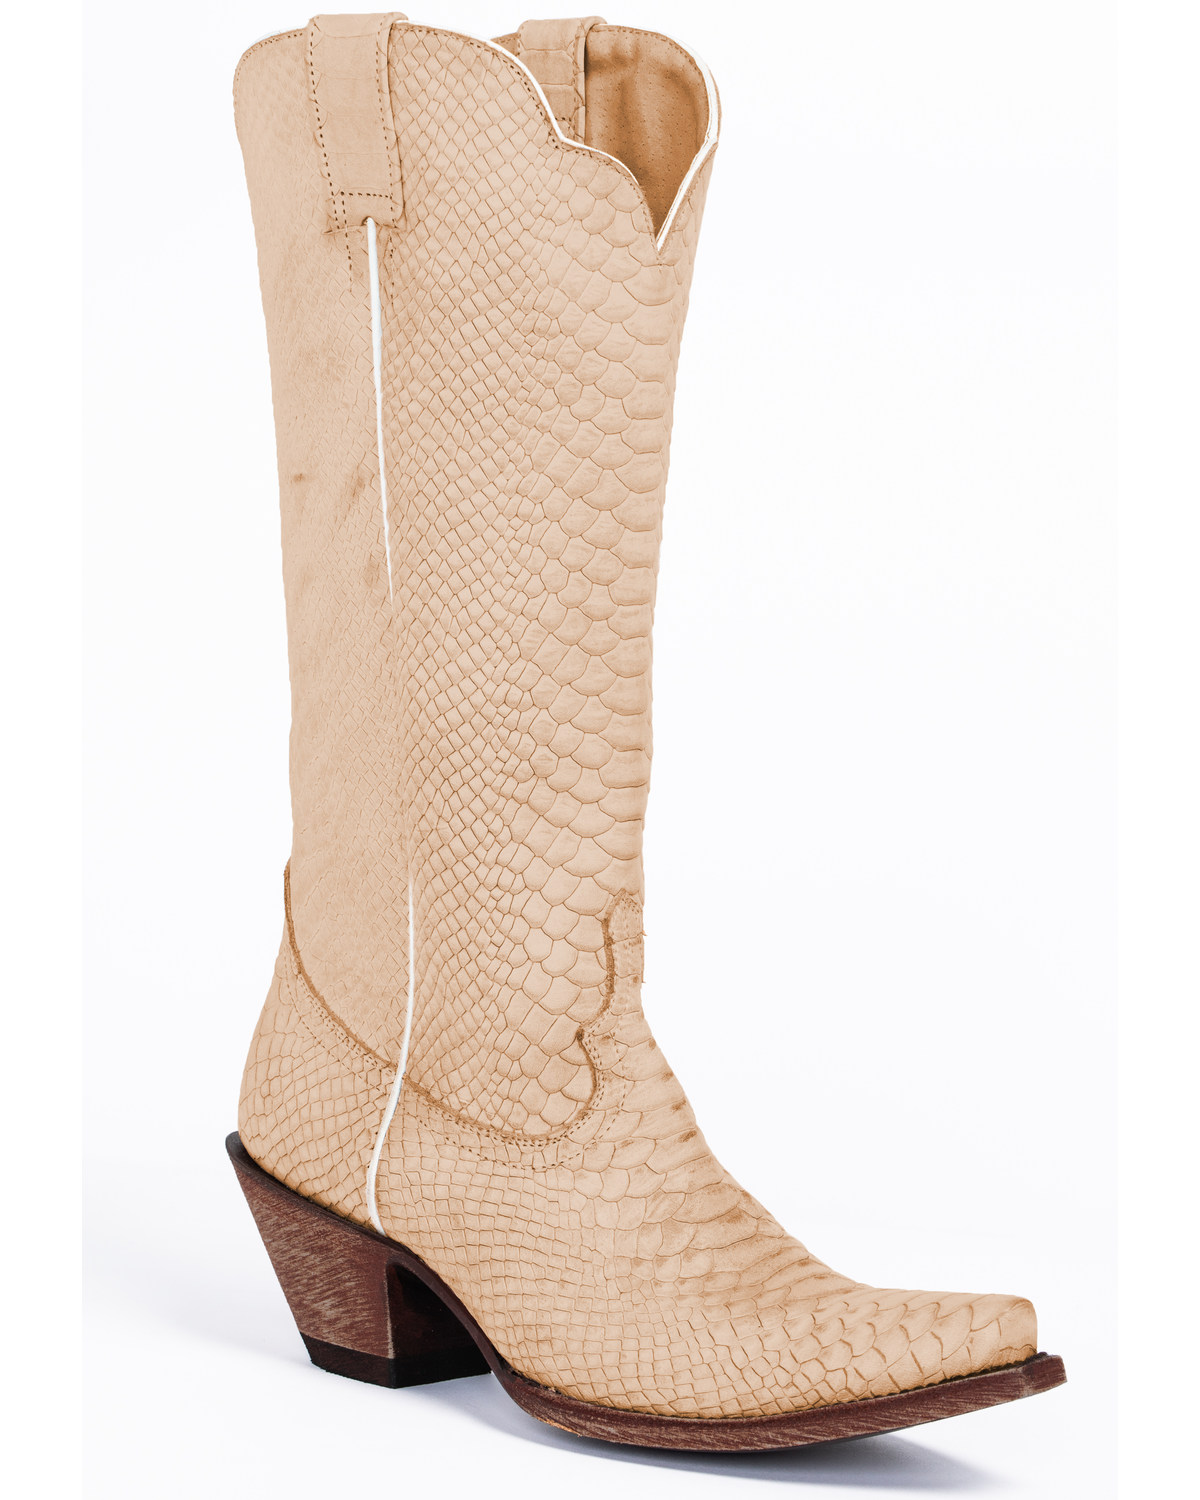 Idyllwind Women's Strut Western Boots